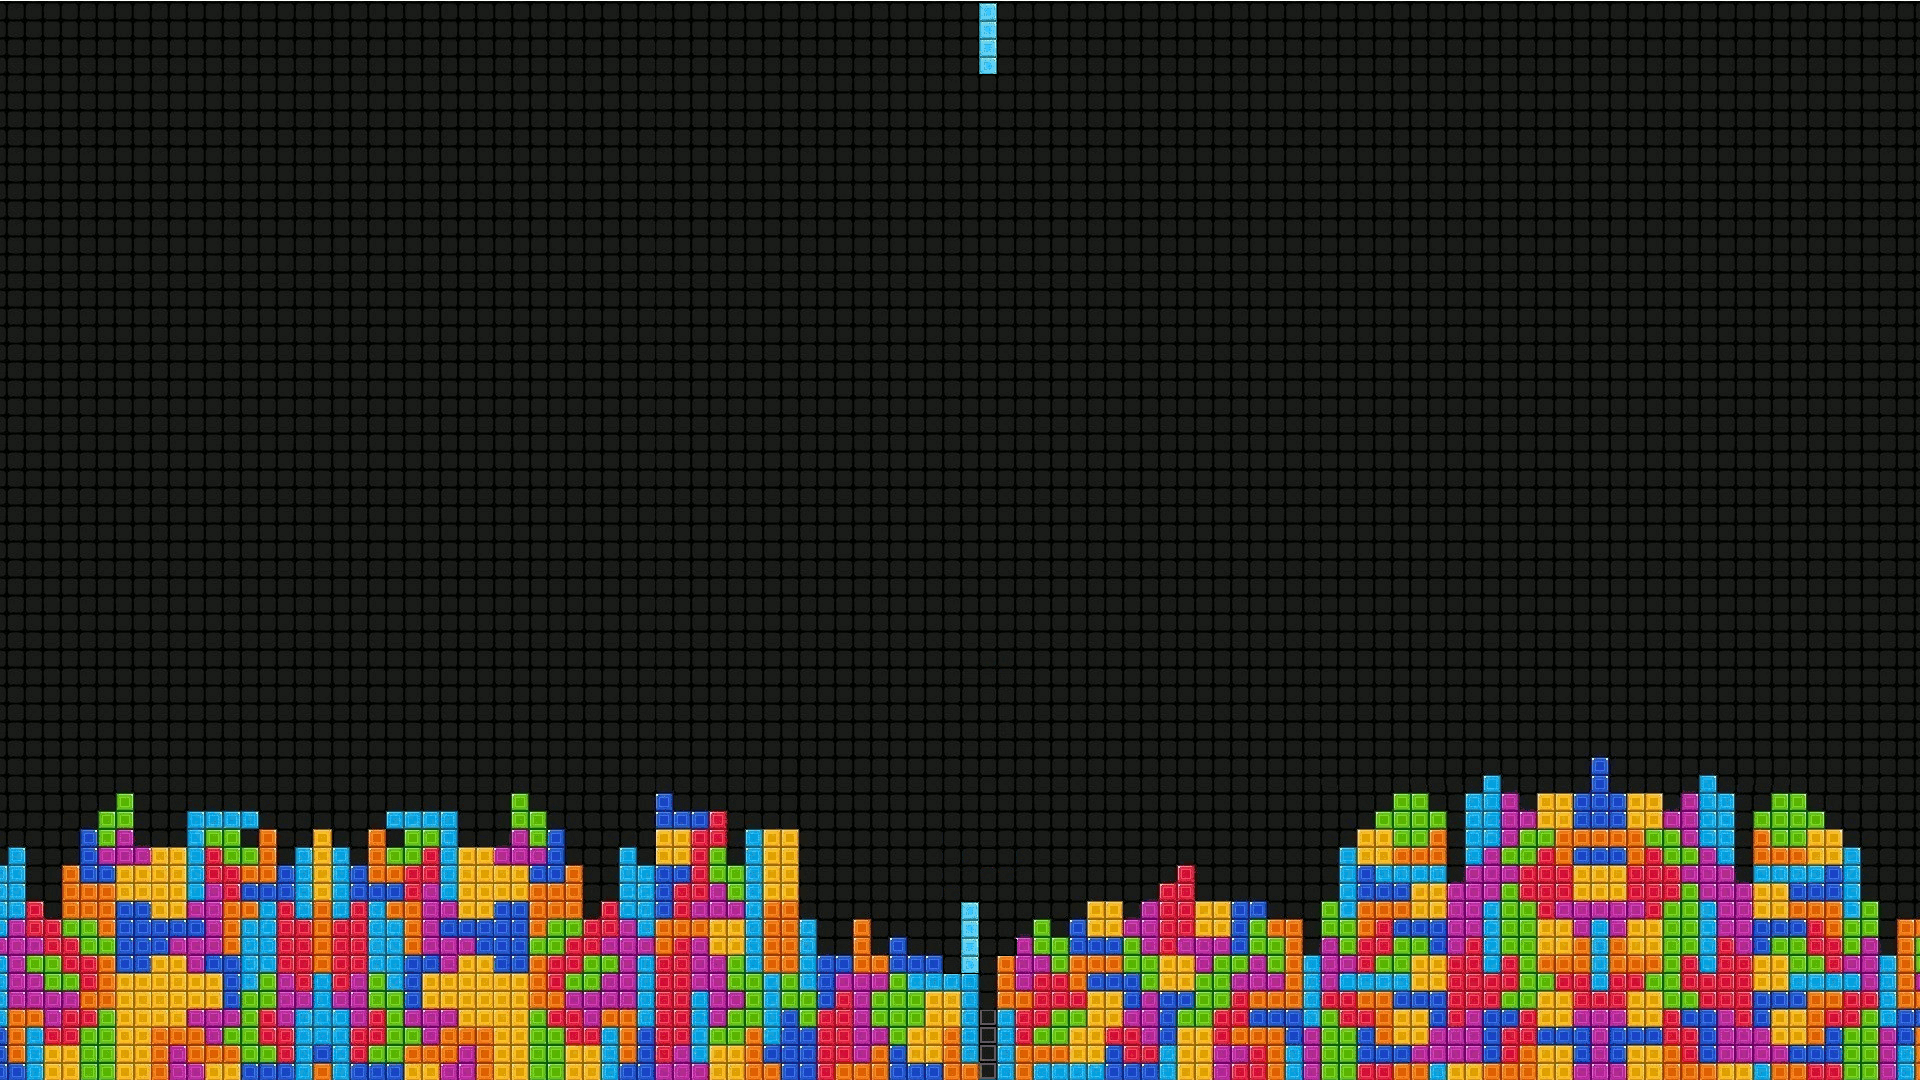 Played tetris until gave part